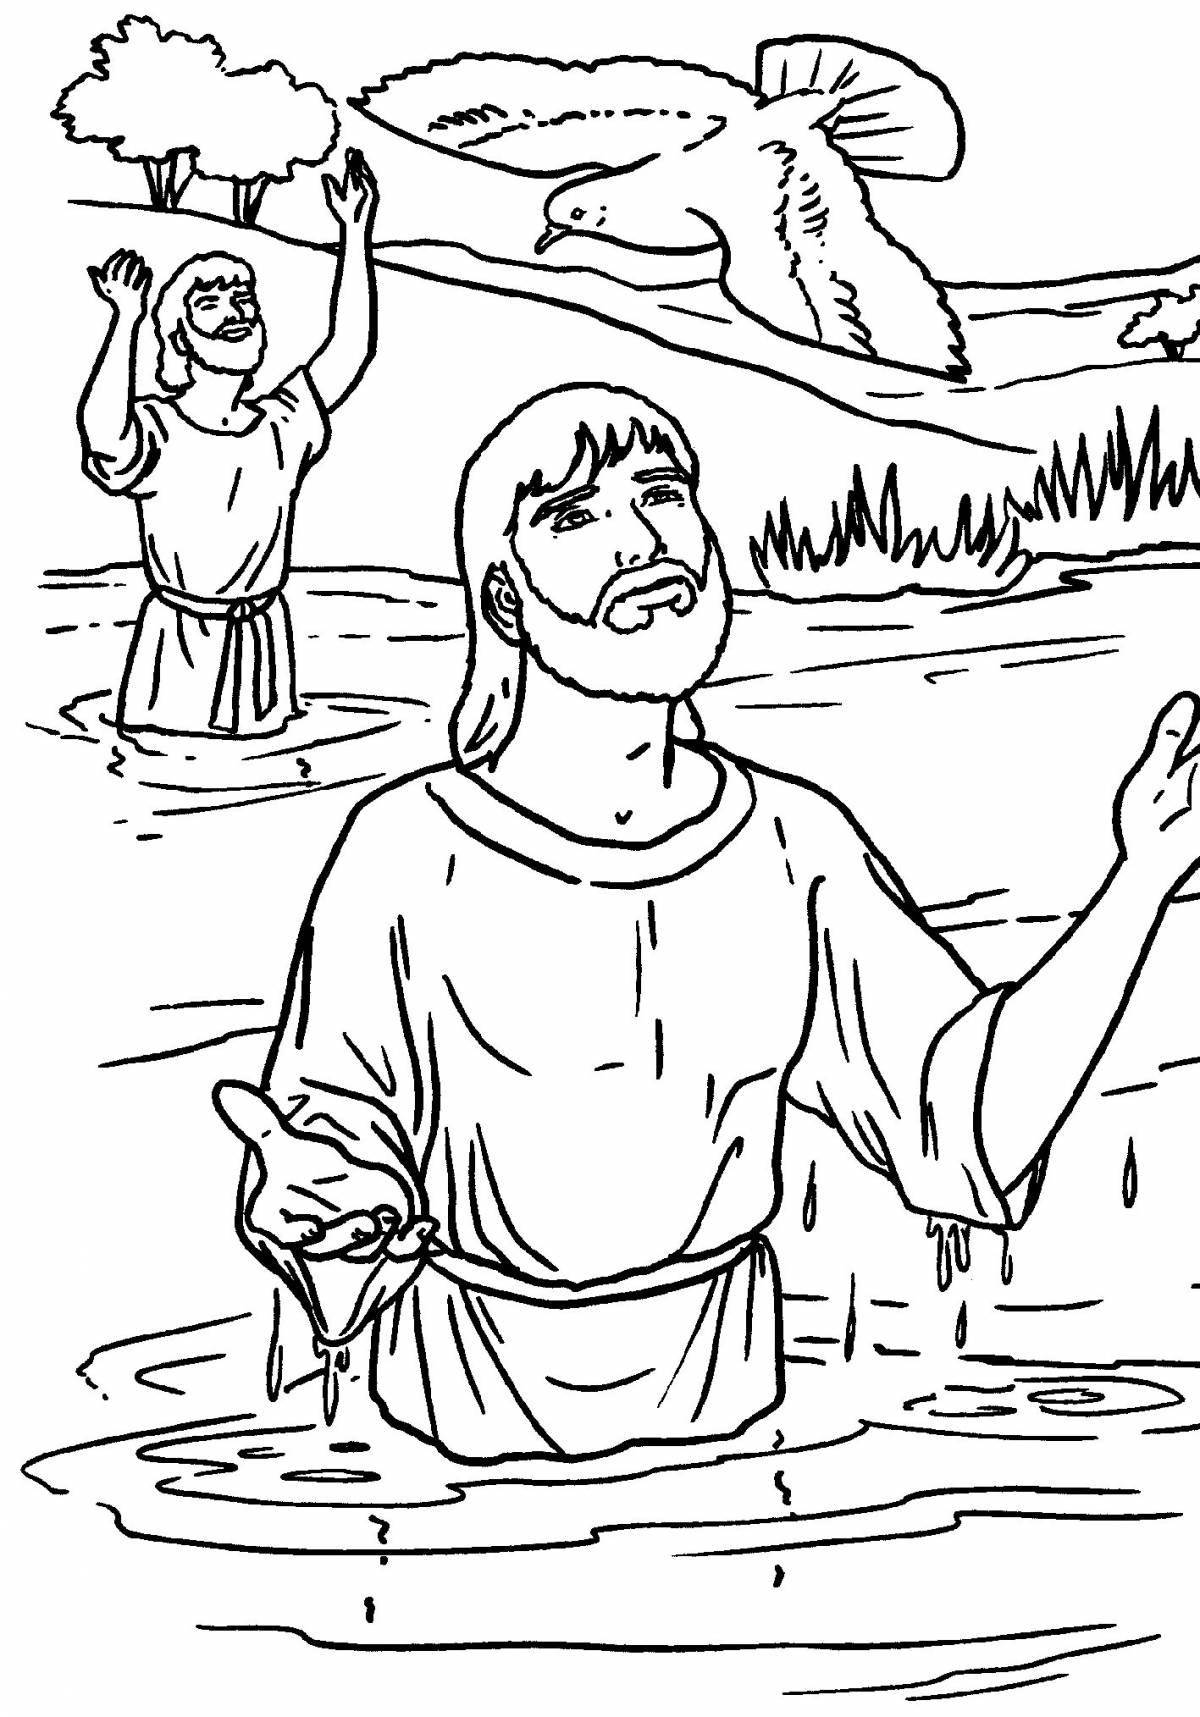 Baptism of jesus christ #2